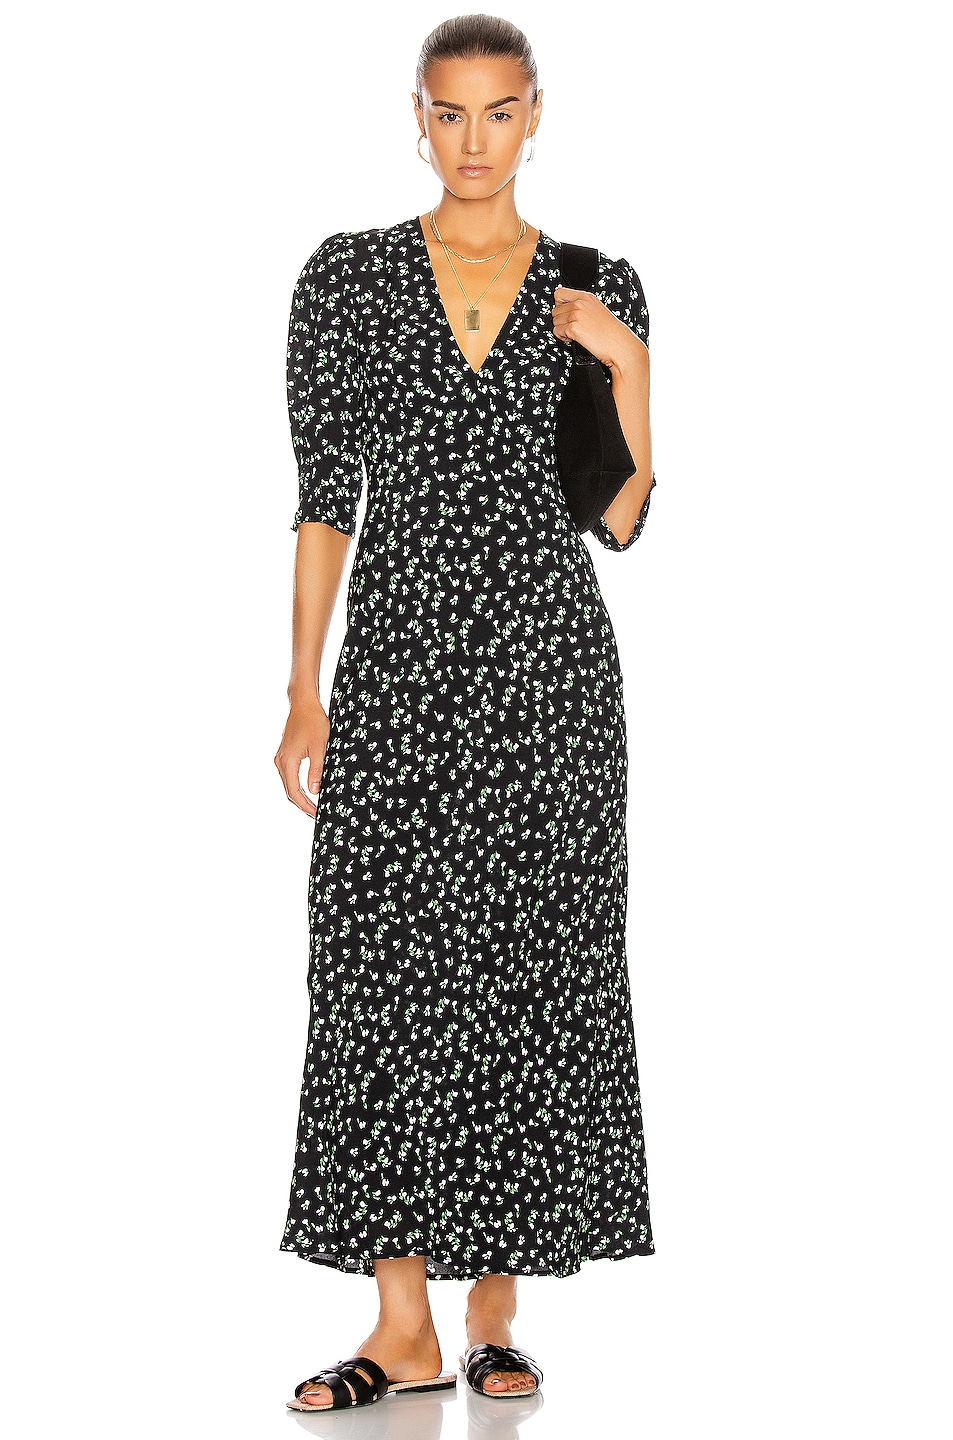 RIXO Zadie Dress in Black & Cream Ditsy Floral | FWRD